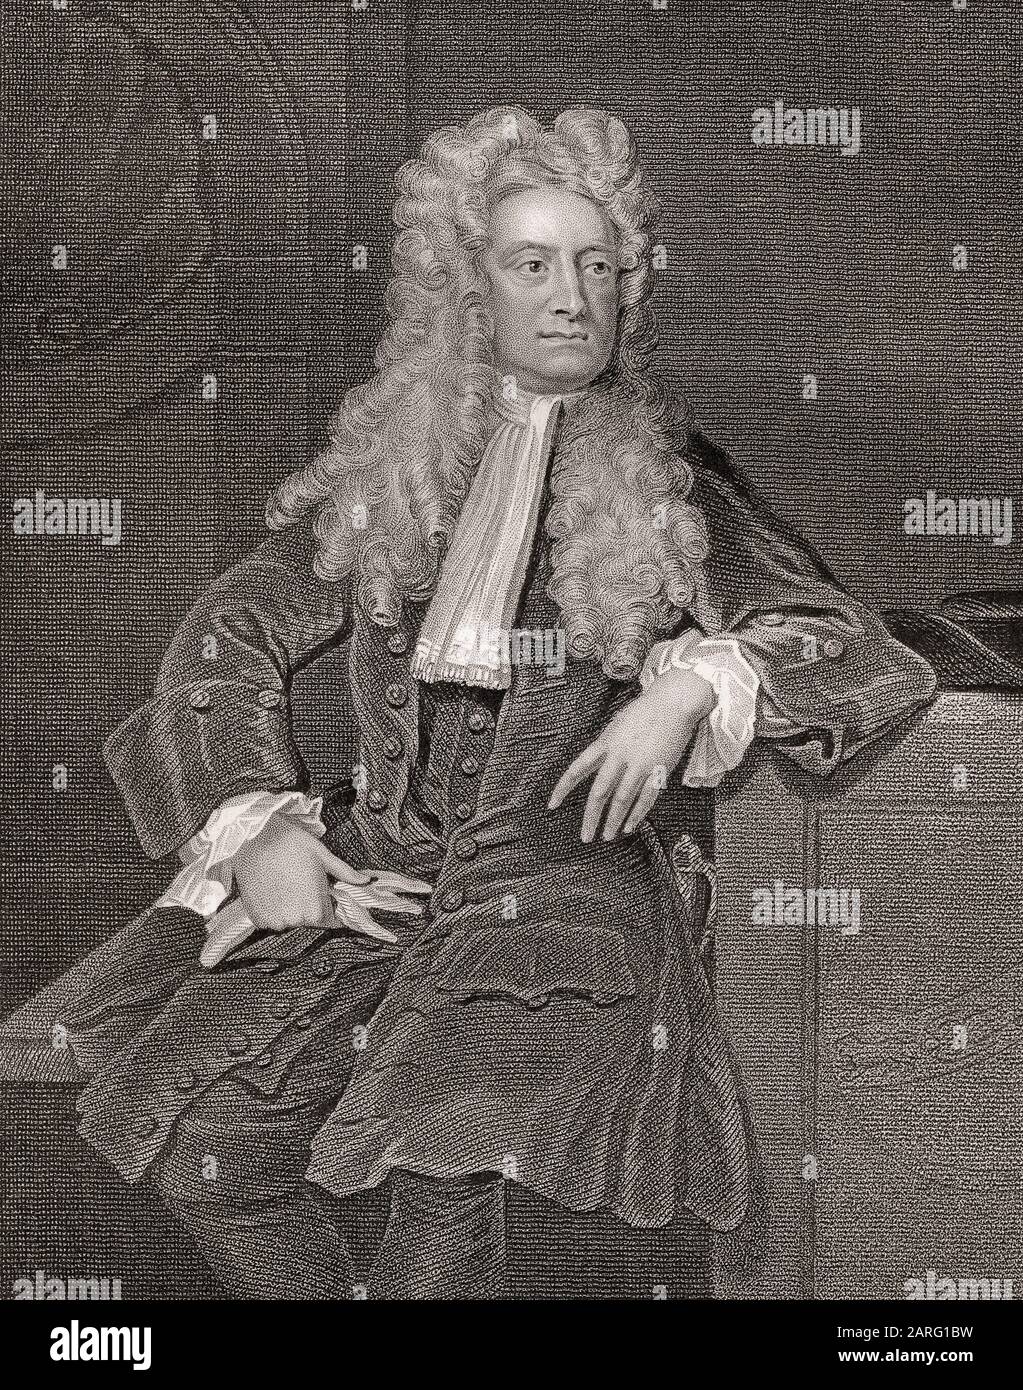 Sir Isaac Newton, 1642-1726, an English physicist and mathematician Stock Photo